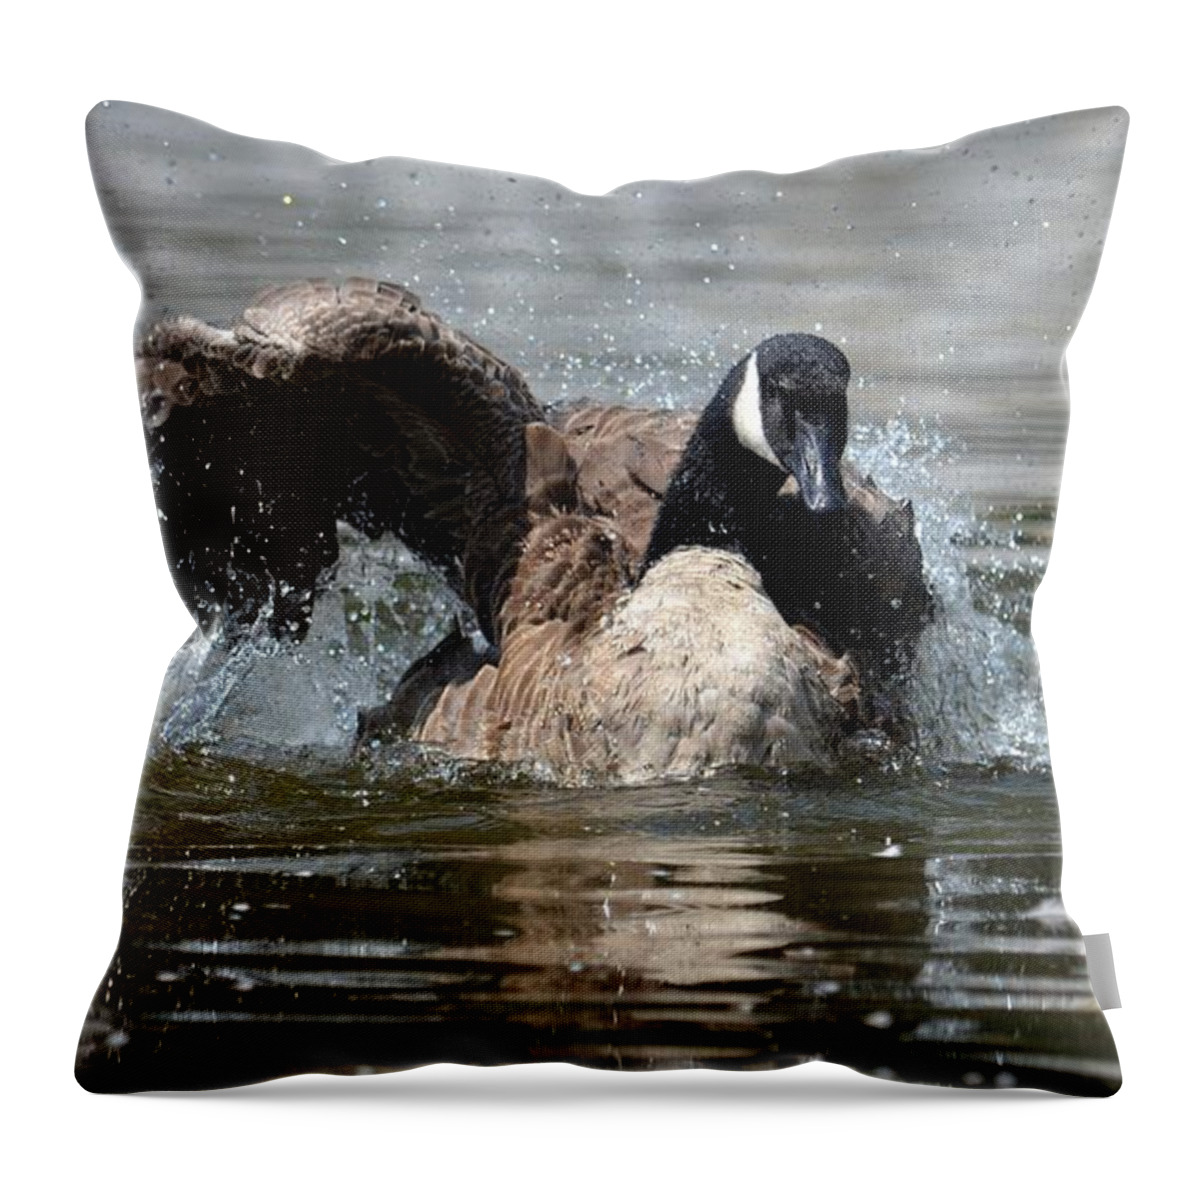 Summer Lovin - Canadian Goose Throw Pillow featuring the photograph Summer Lovin - Canadian Goose by Maria Urso